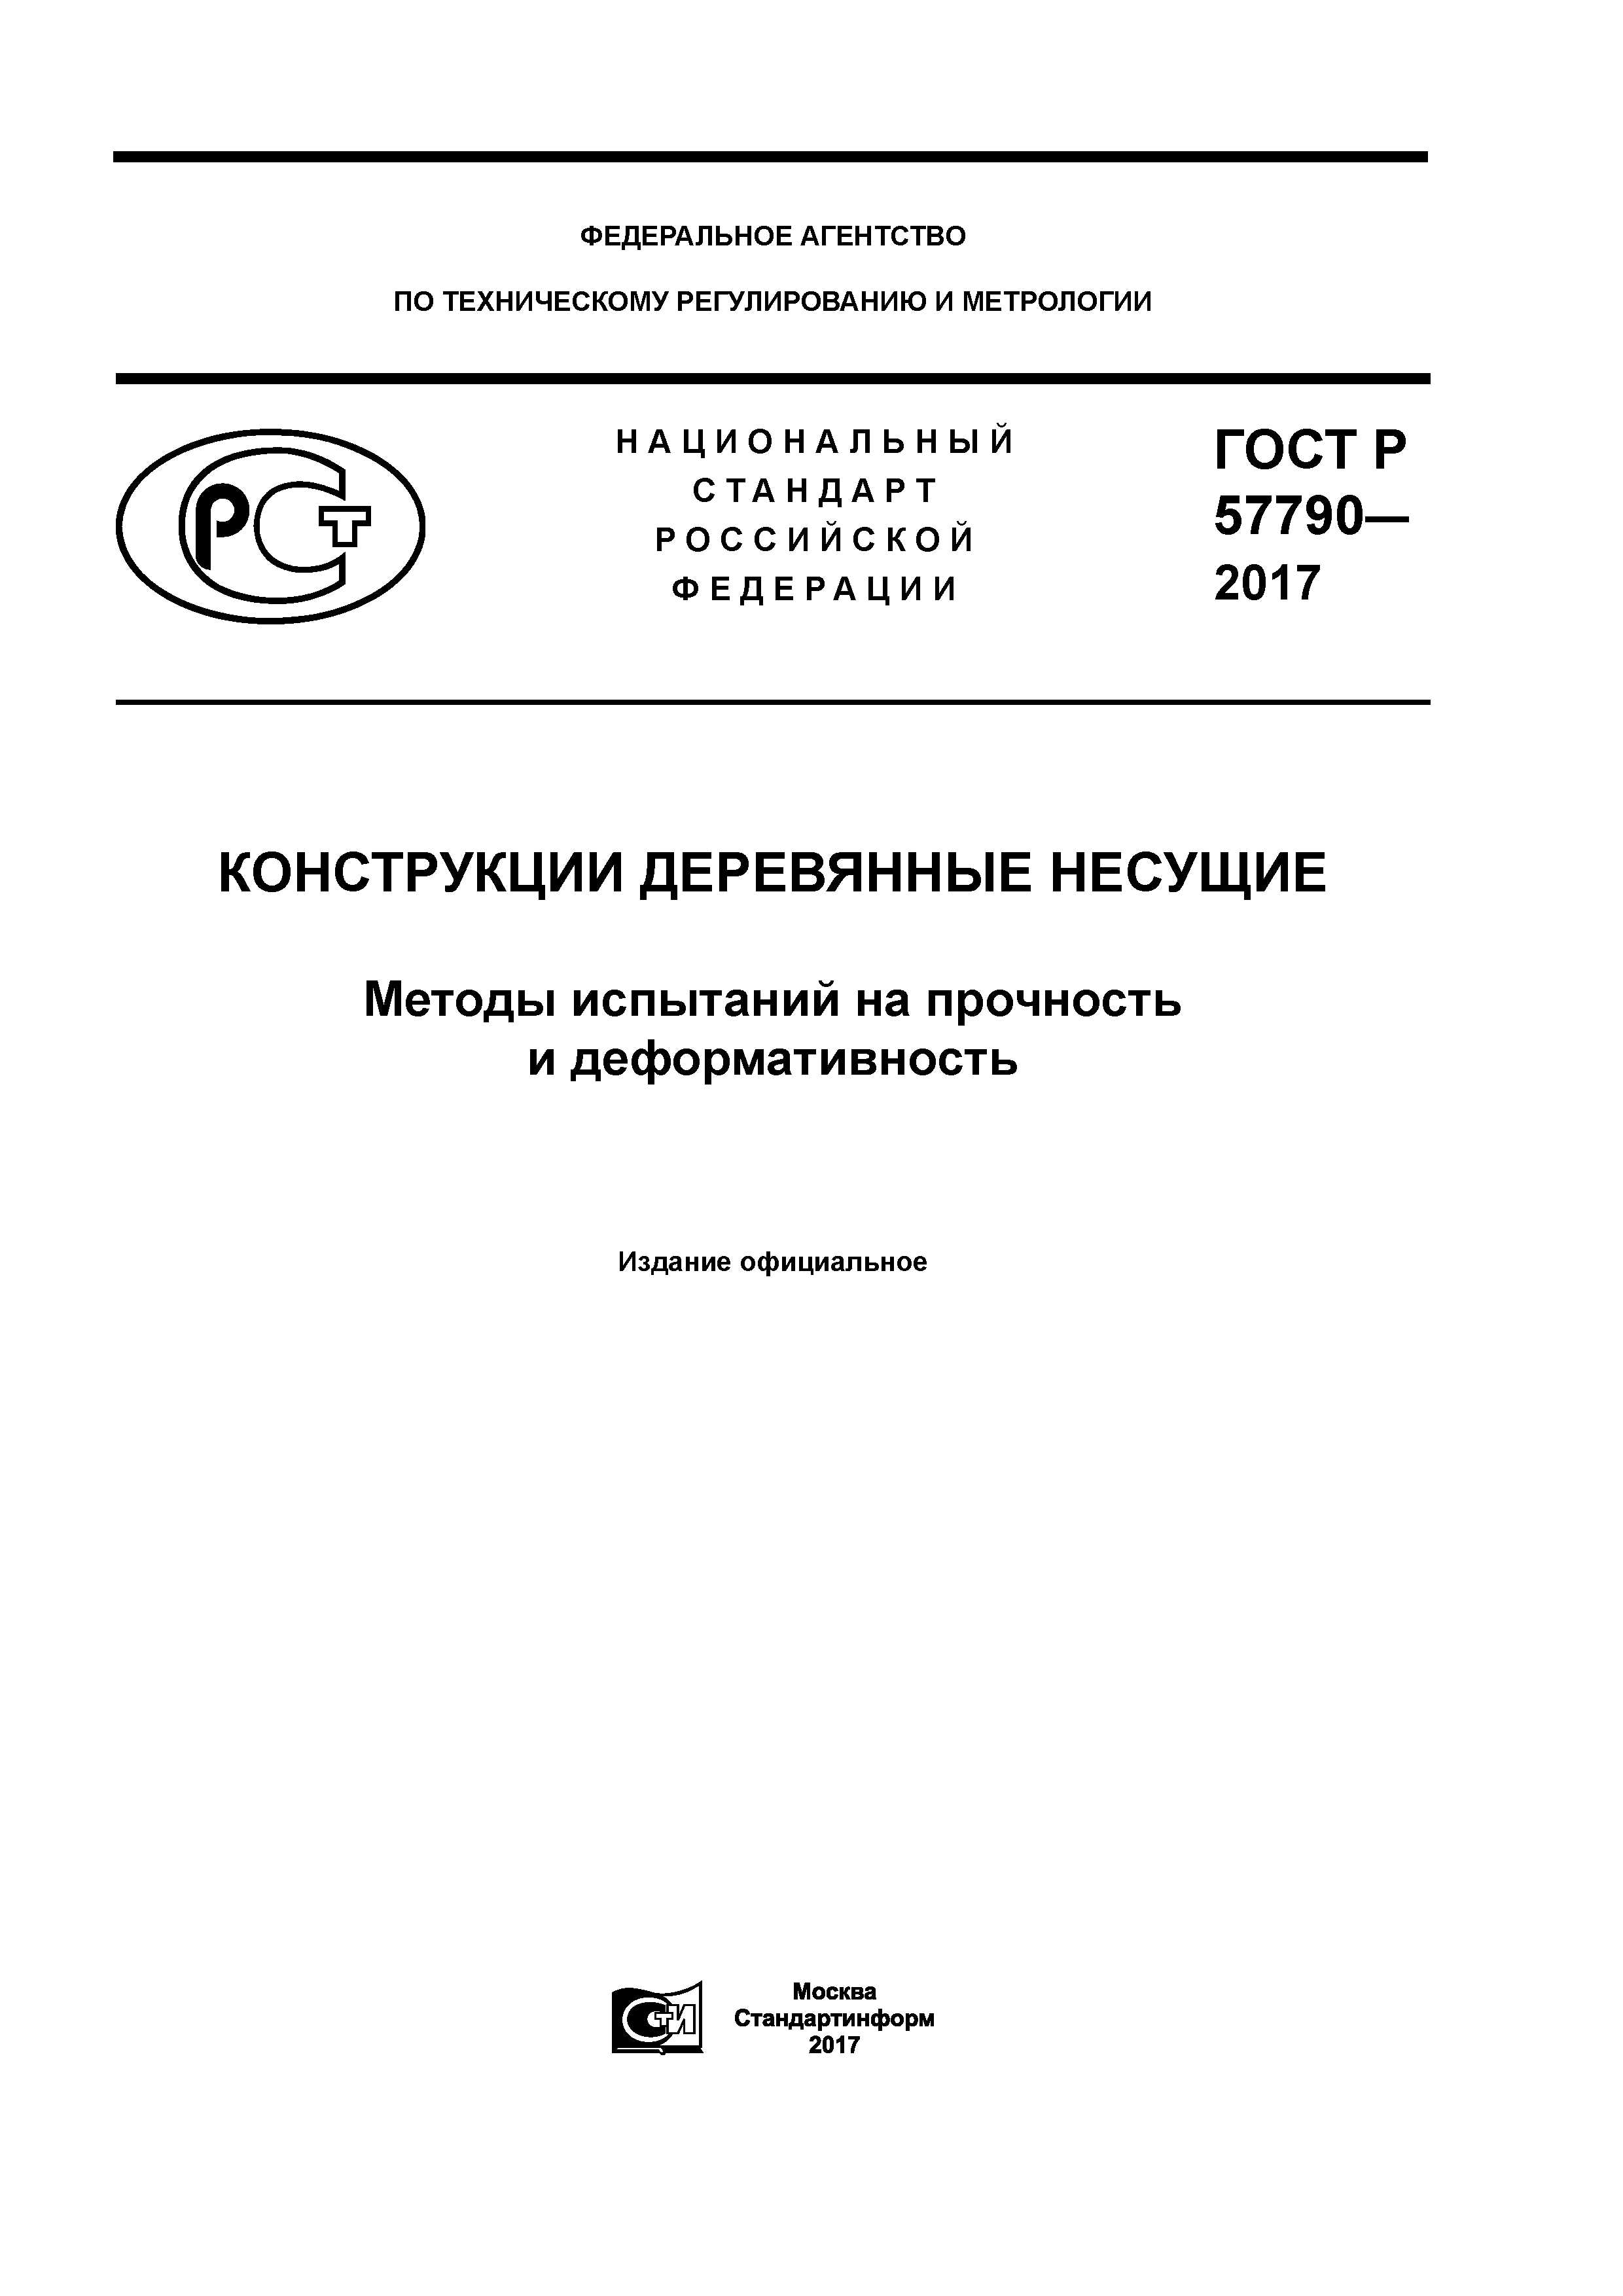 ГОСТ Р 57790-2017